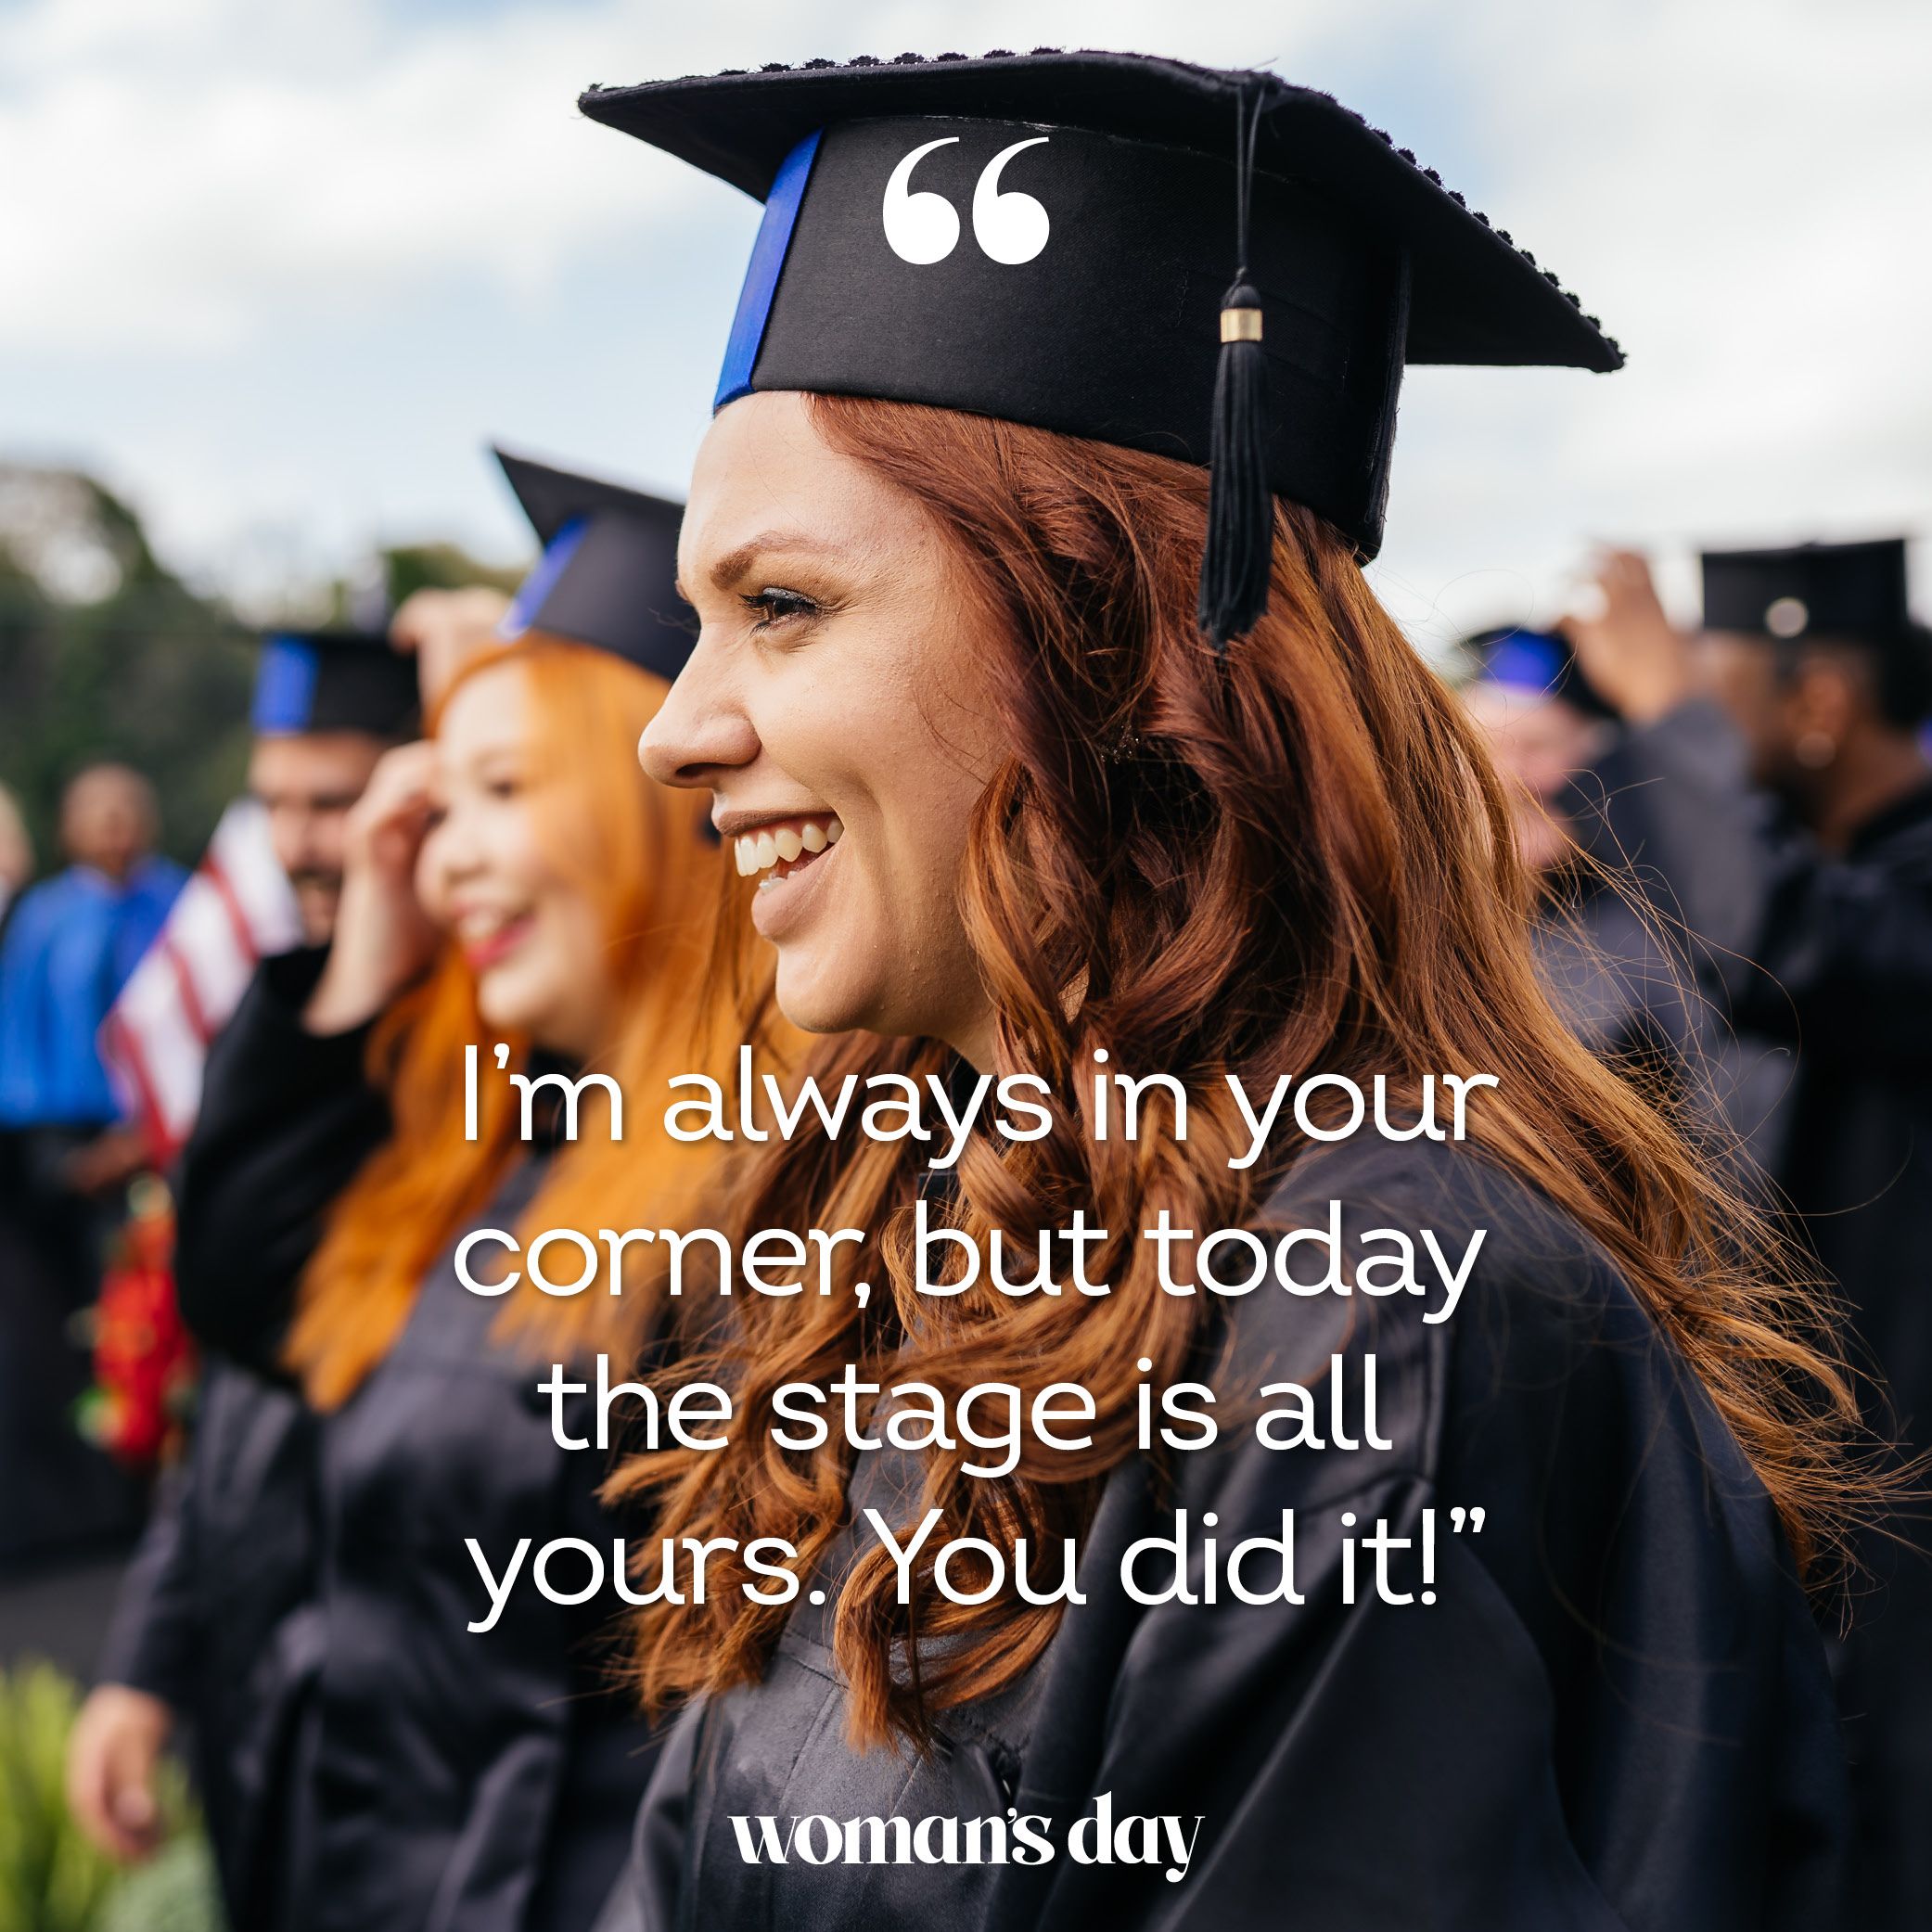 high school graduation sayings